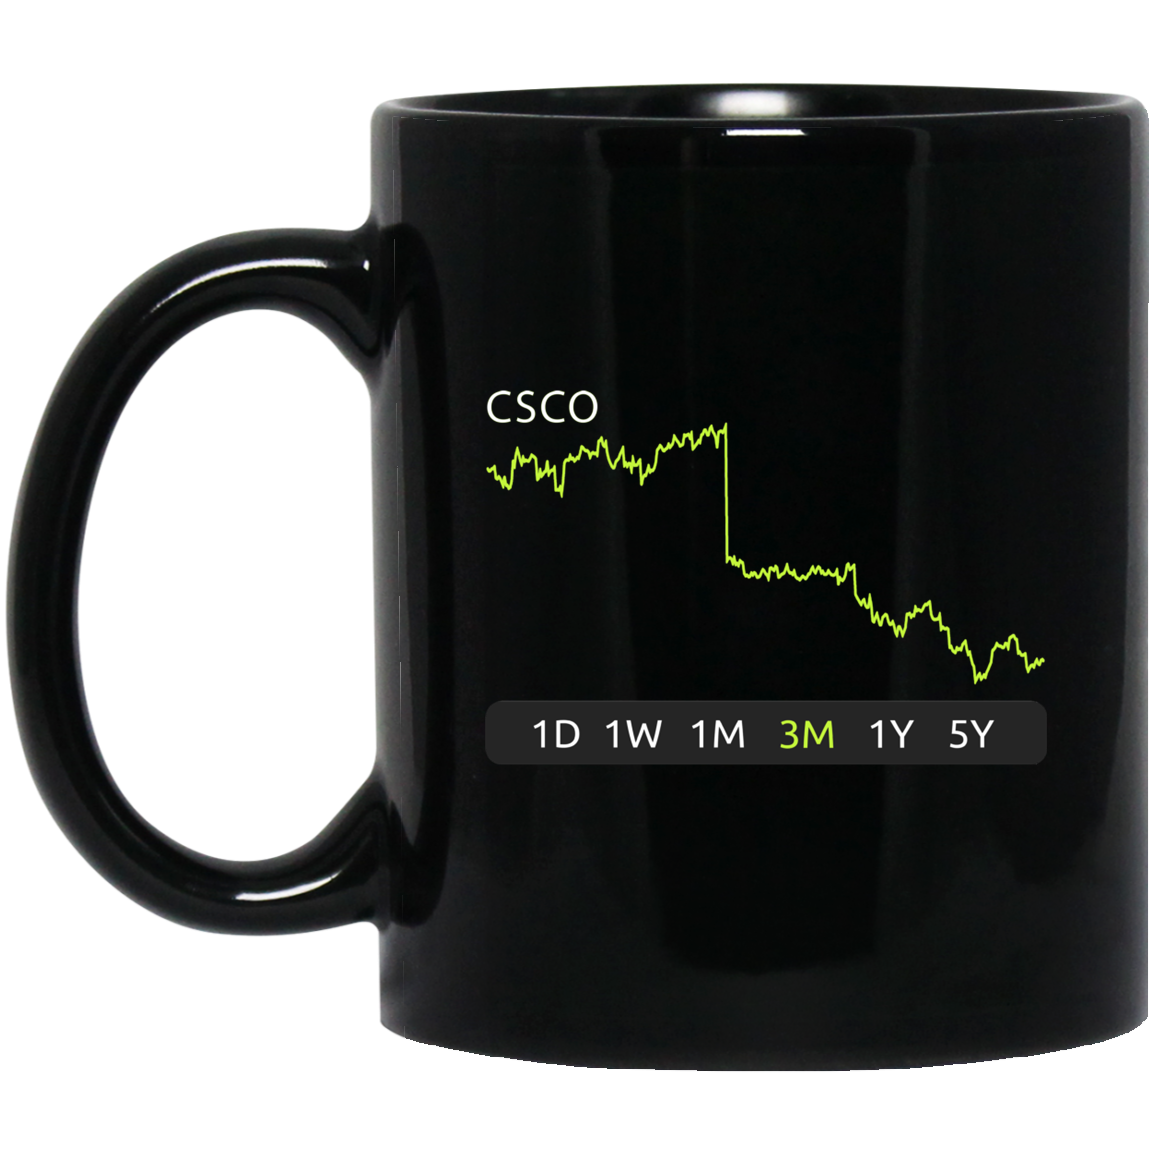 CSCO Stock 3m   Mug